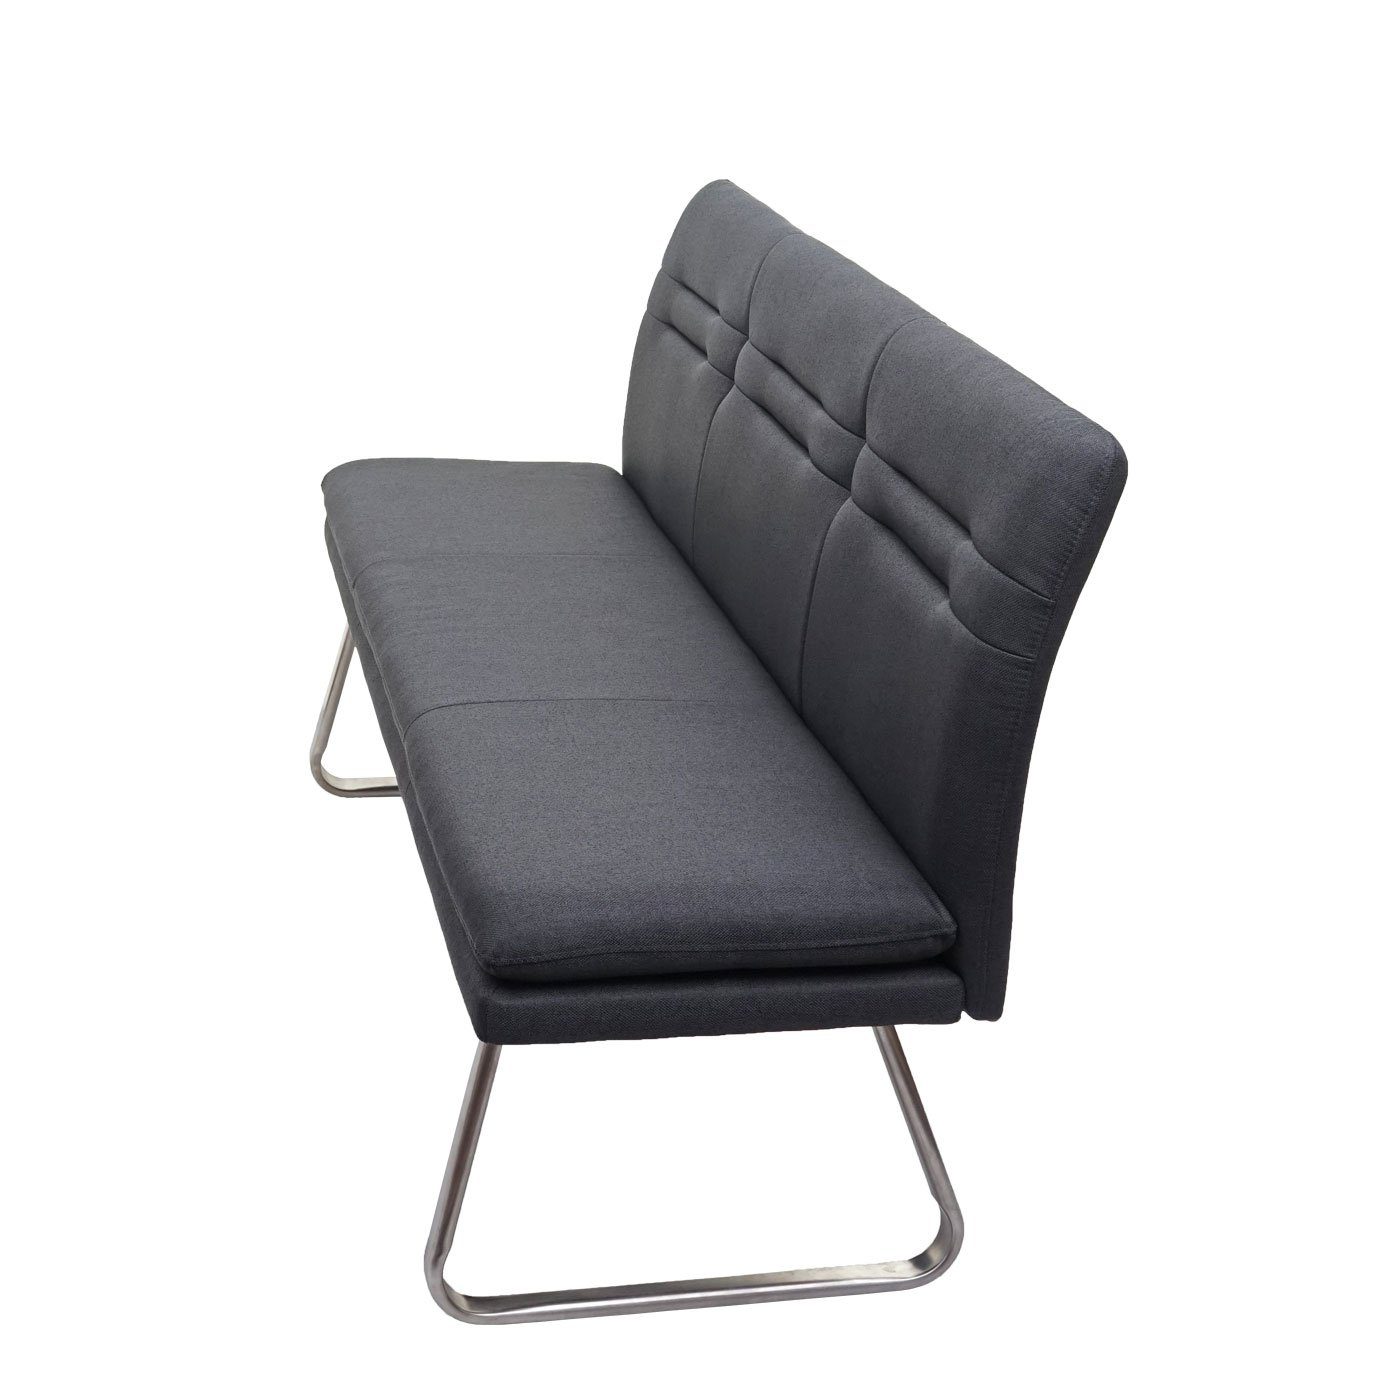 MCW Sitzbank MCW-H70-S, Inklusive Fußbodenschoner, grau Mit | Ziernaht grau